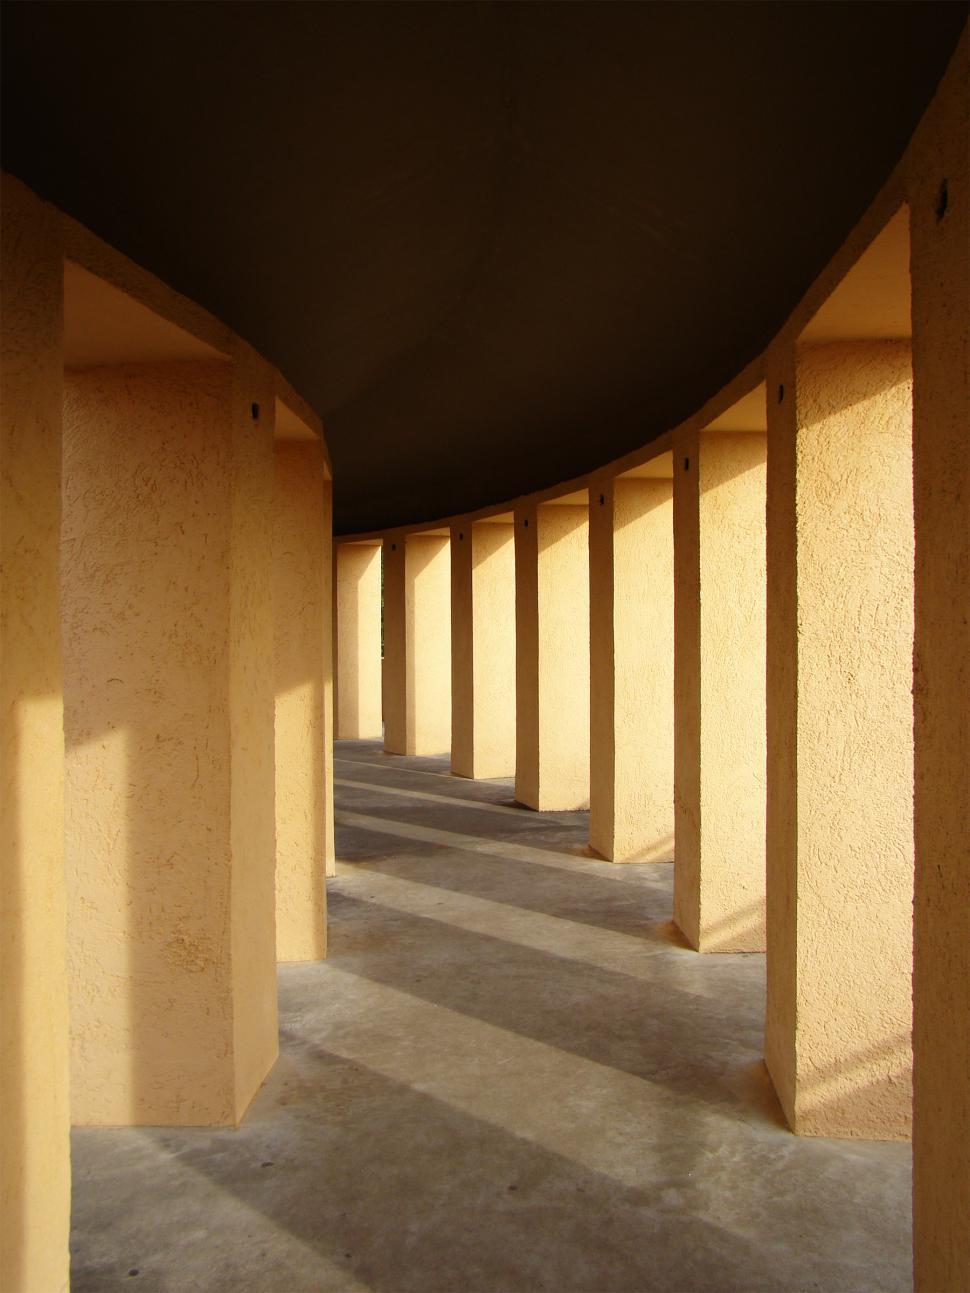 Free Image of Corridor 